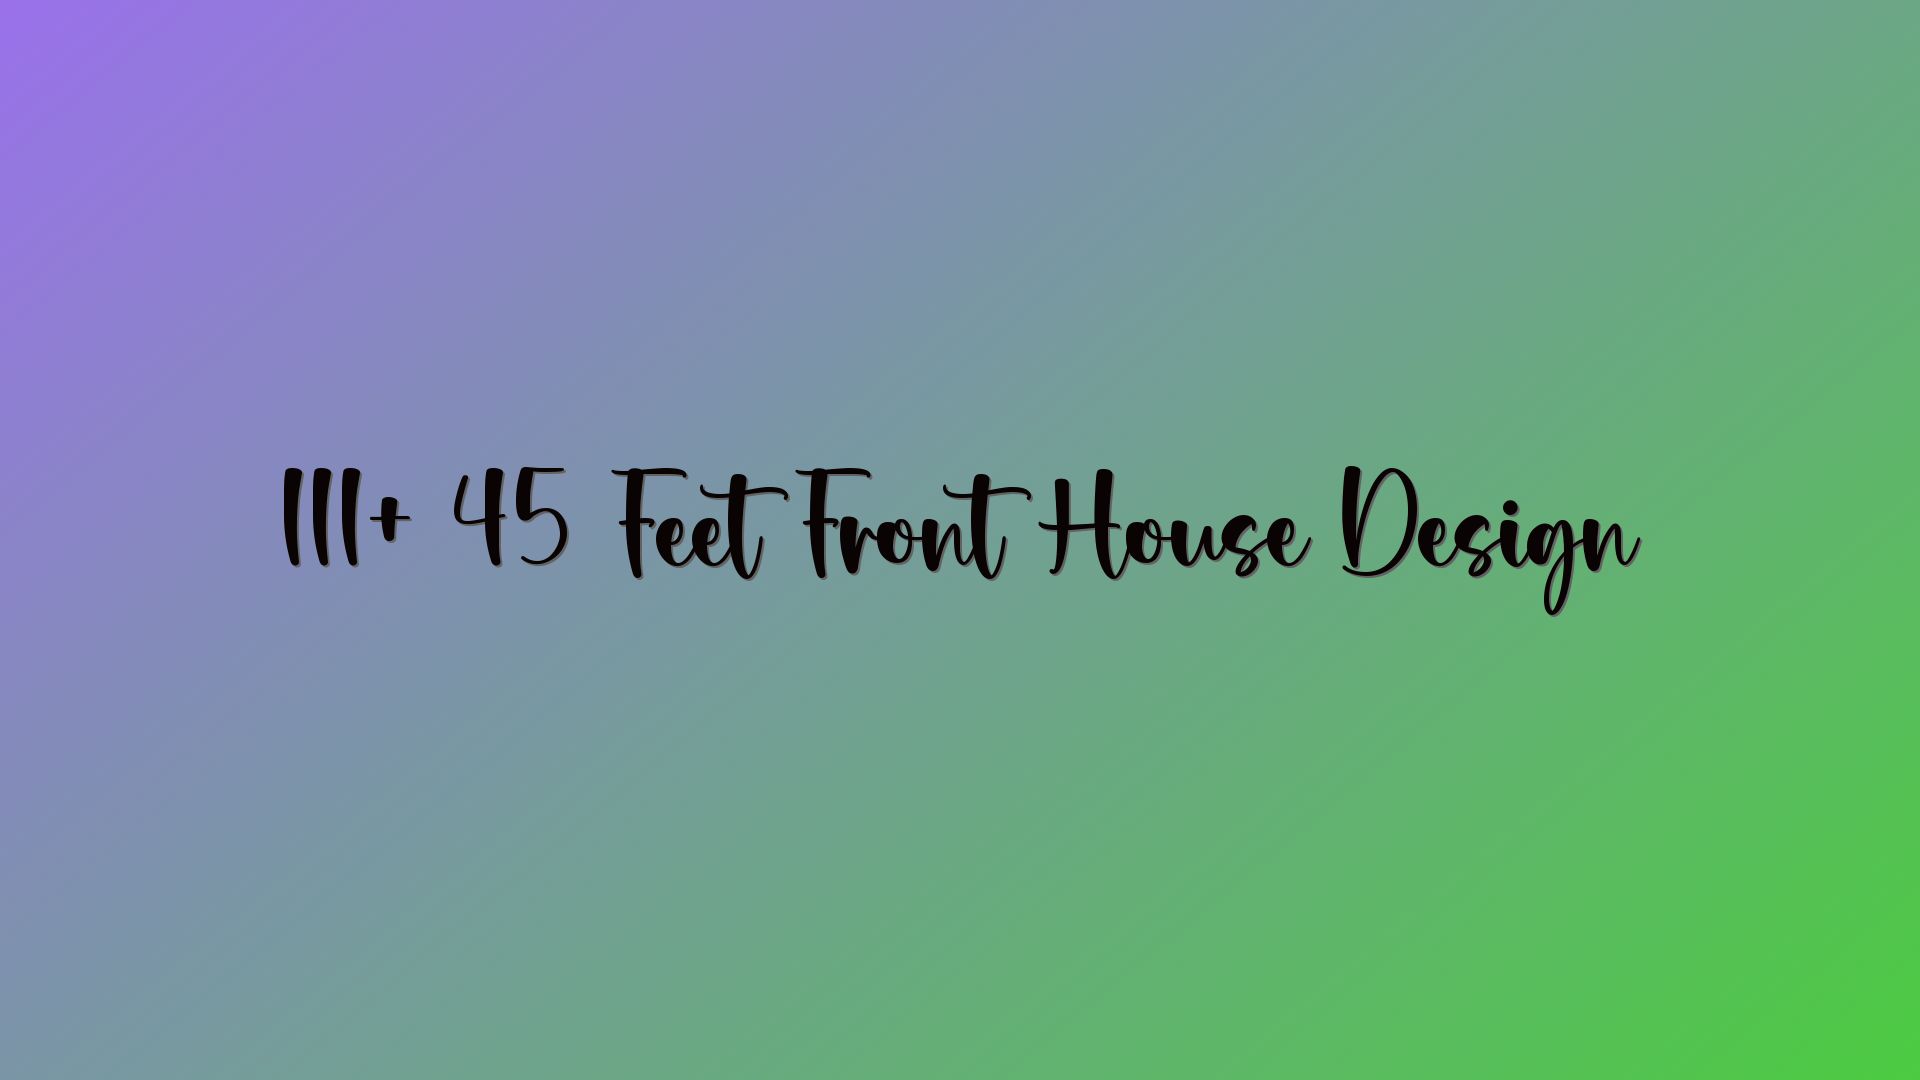 111+ 45 Feet Front House Design